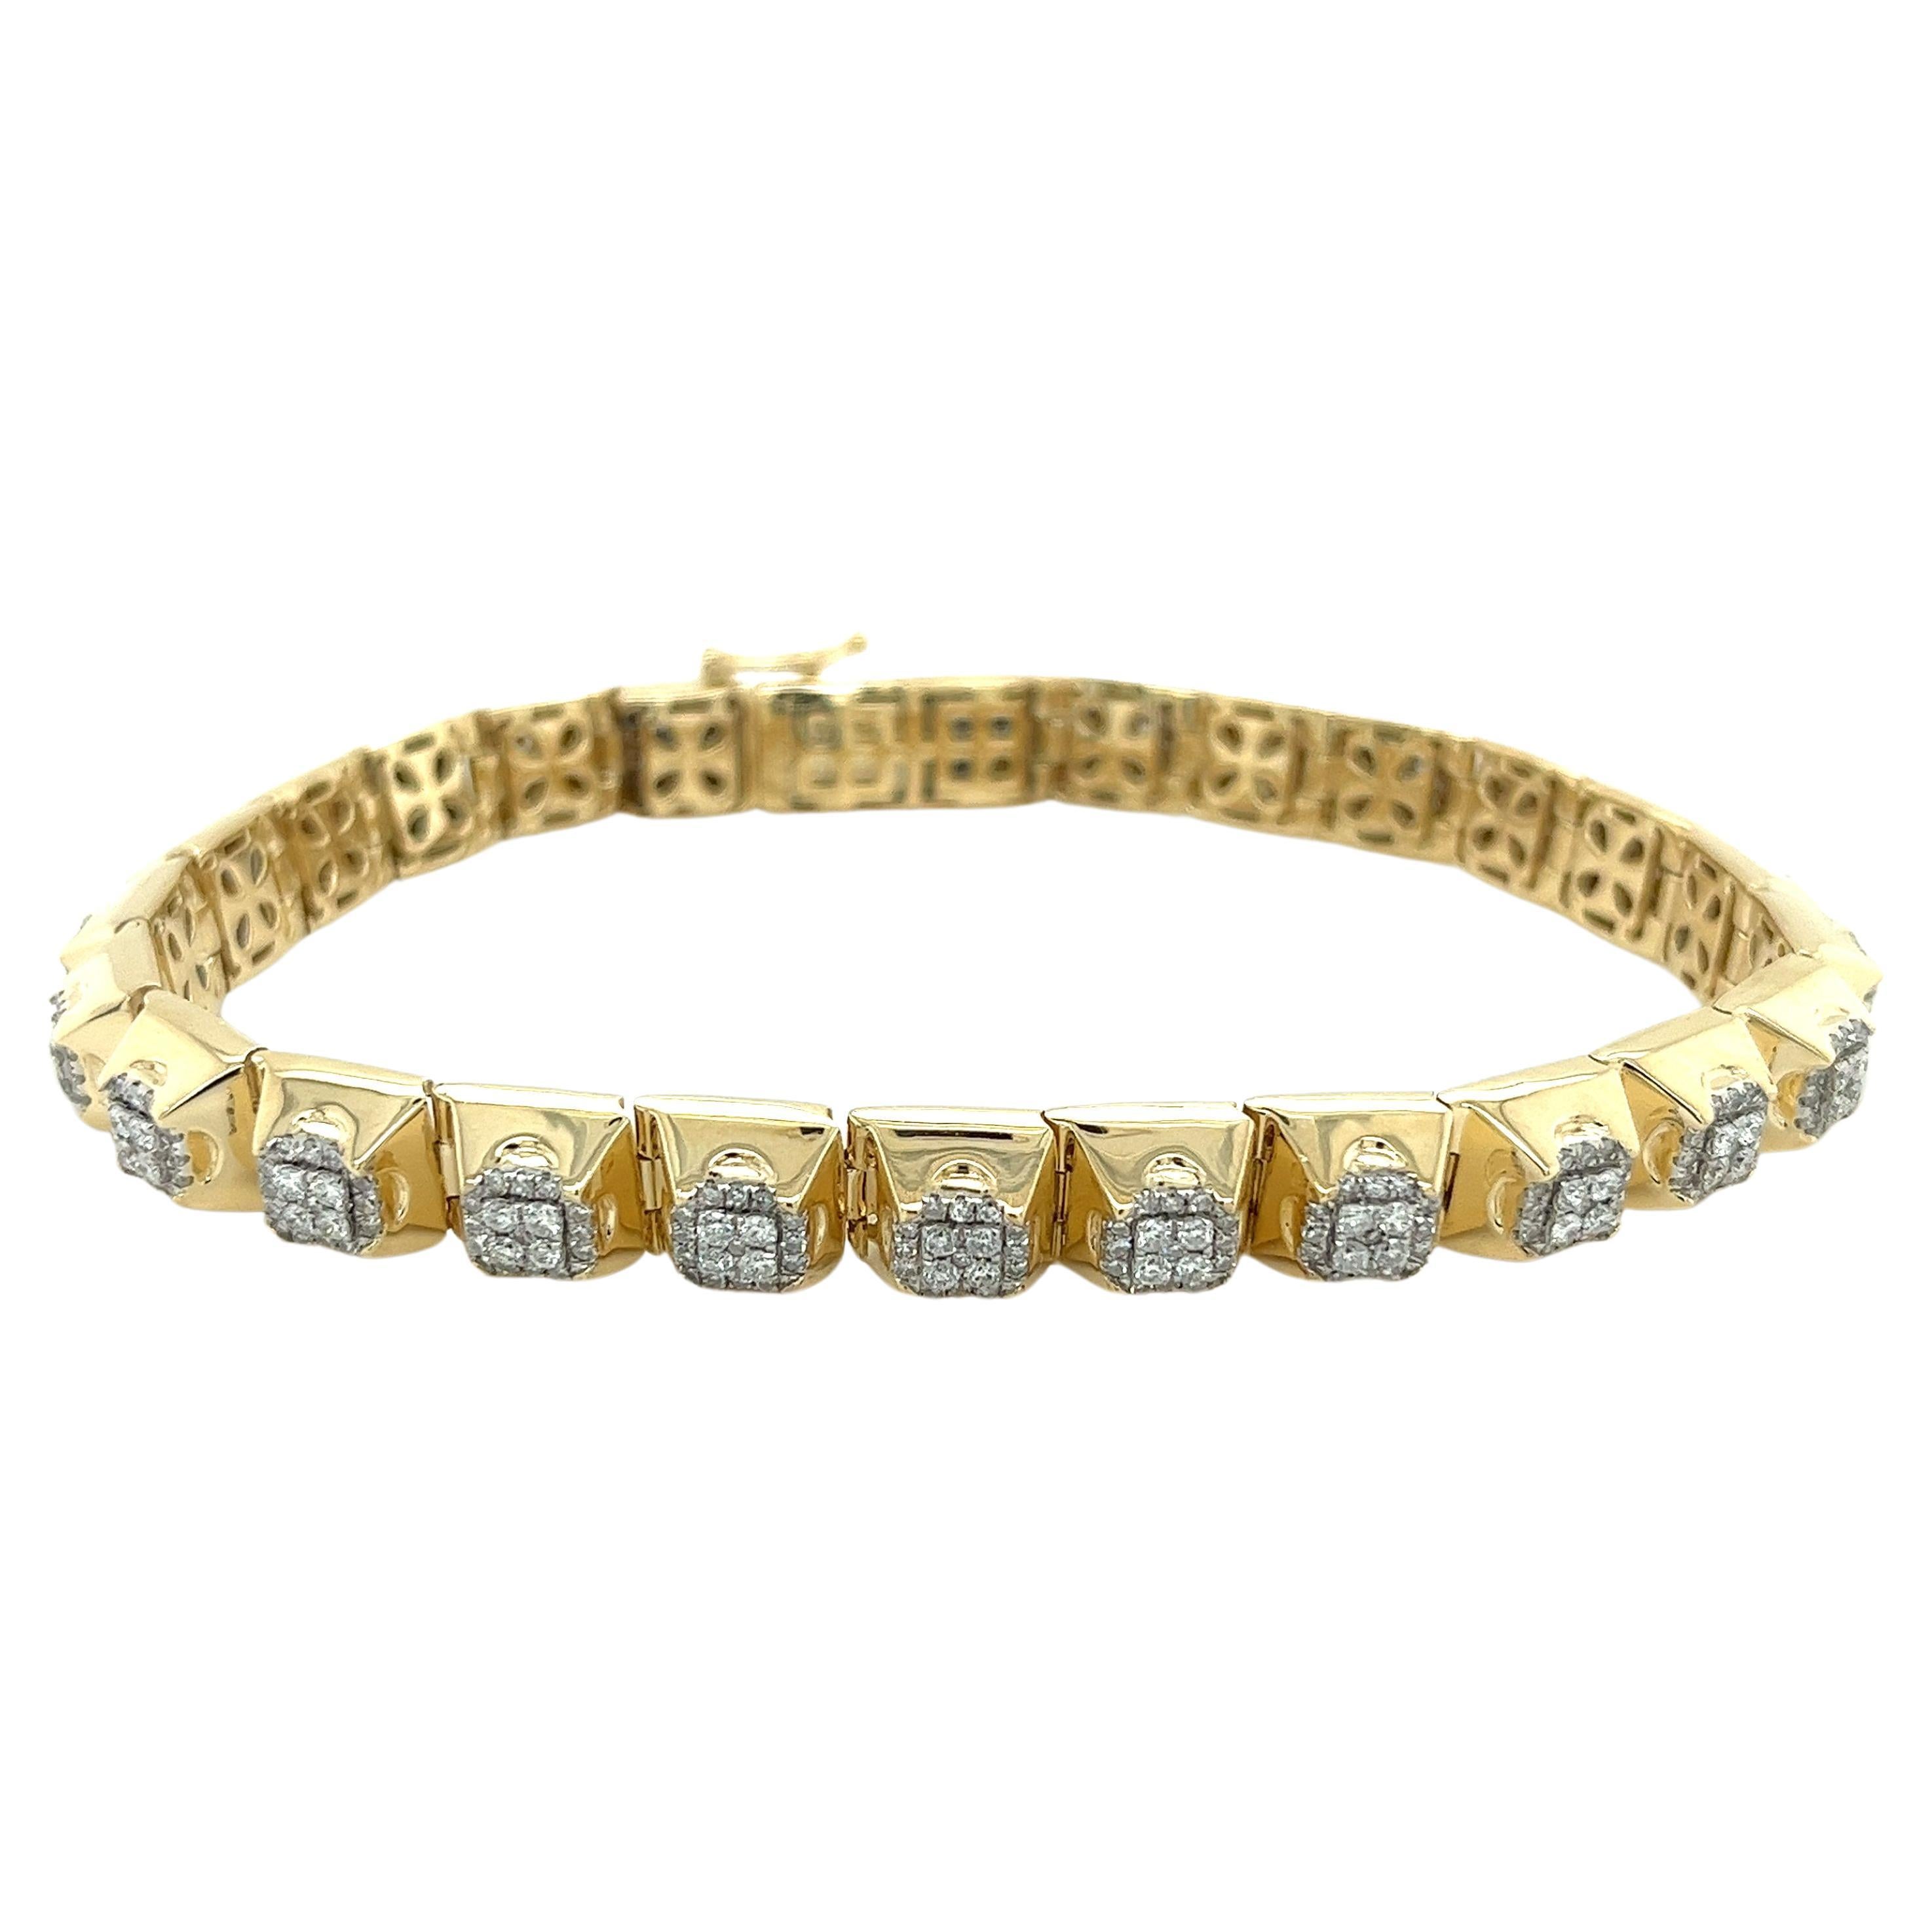 6 Carat TW Diamond 14K Solid Gold Men's Two Tone Square Shaped Link Bracelet